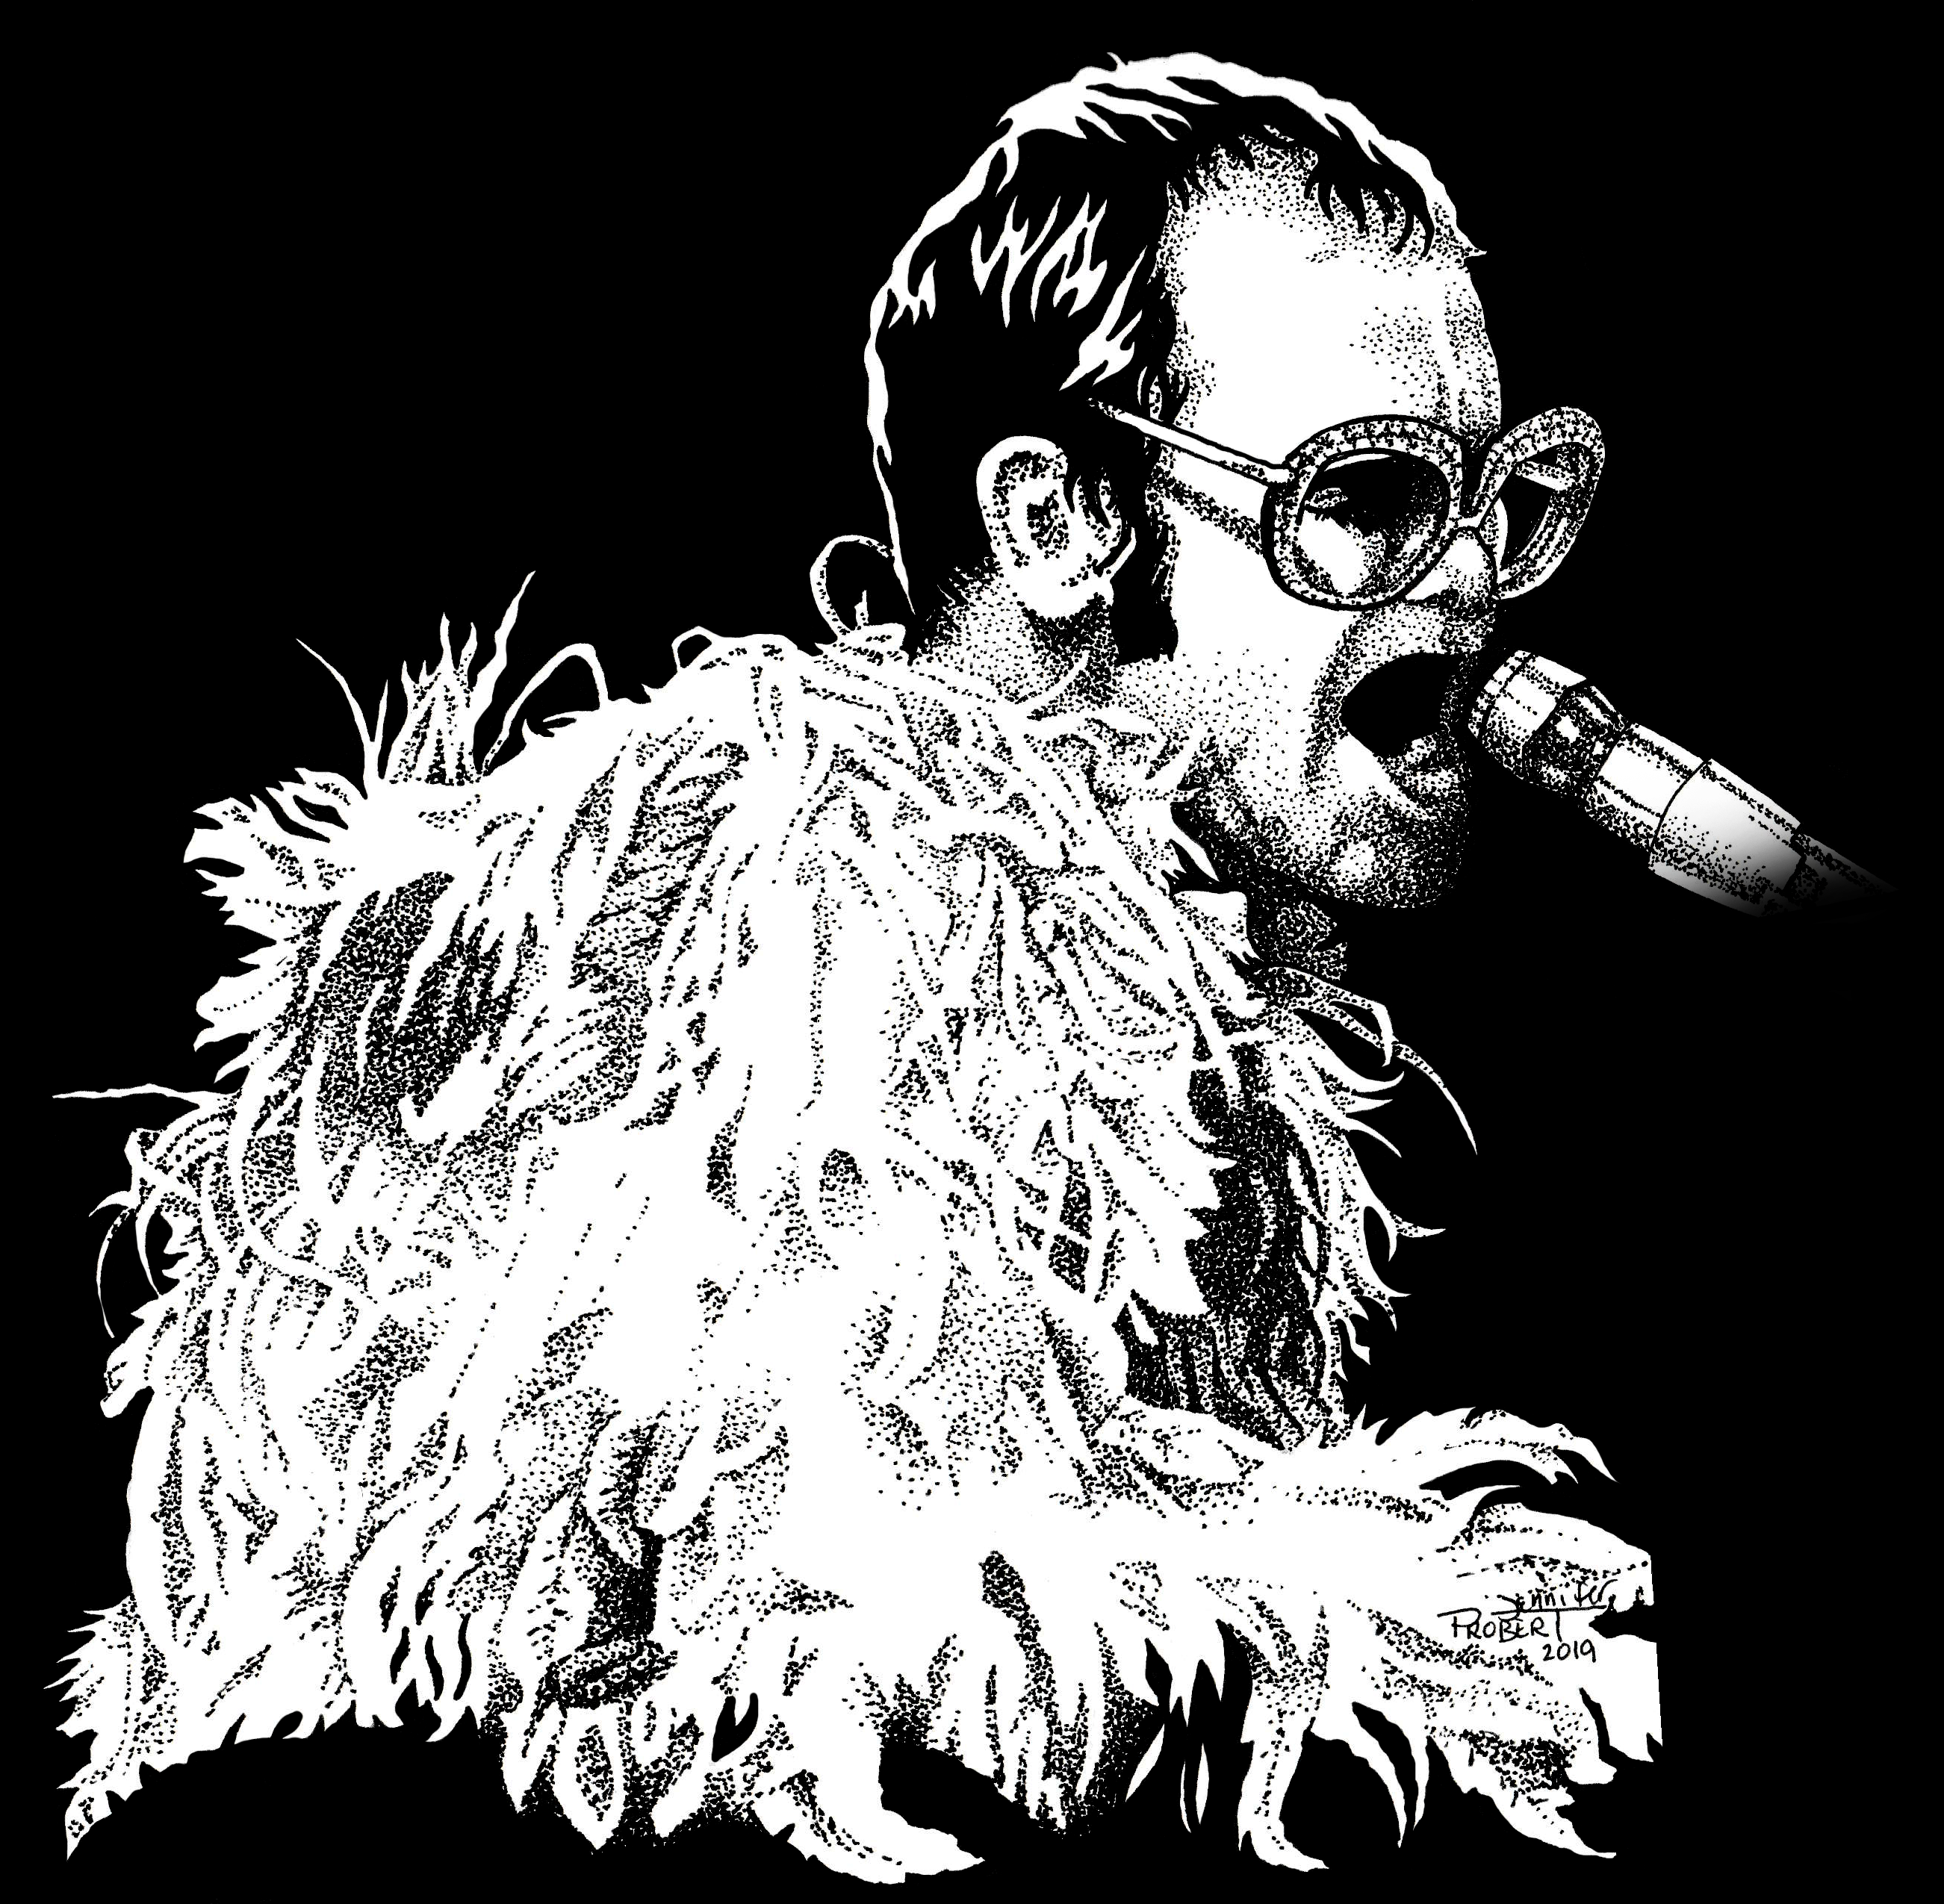 Elton John singing at a concert in the mid-1970s. Illustration rendered in marker on bristol board.